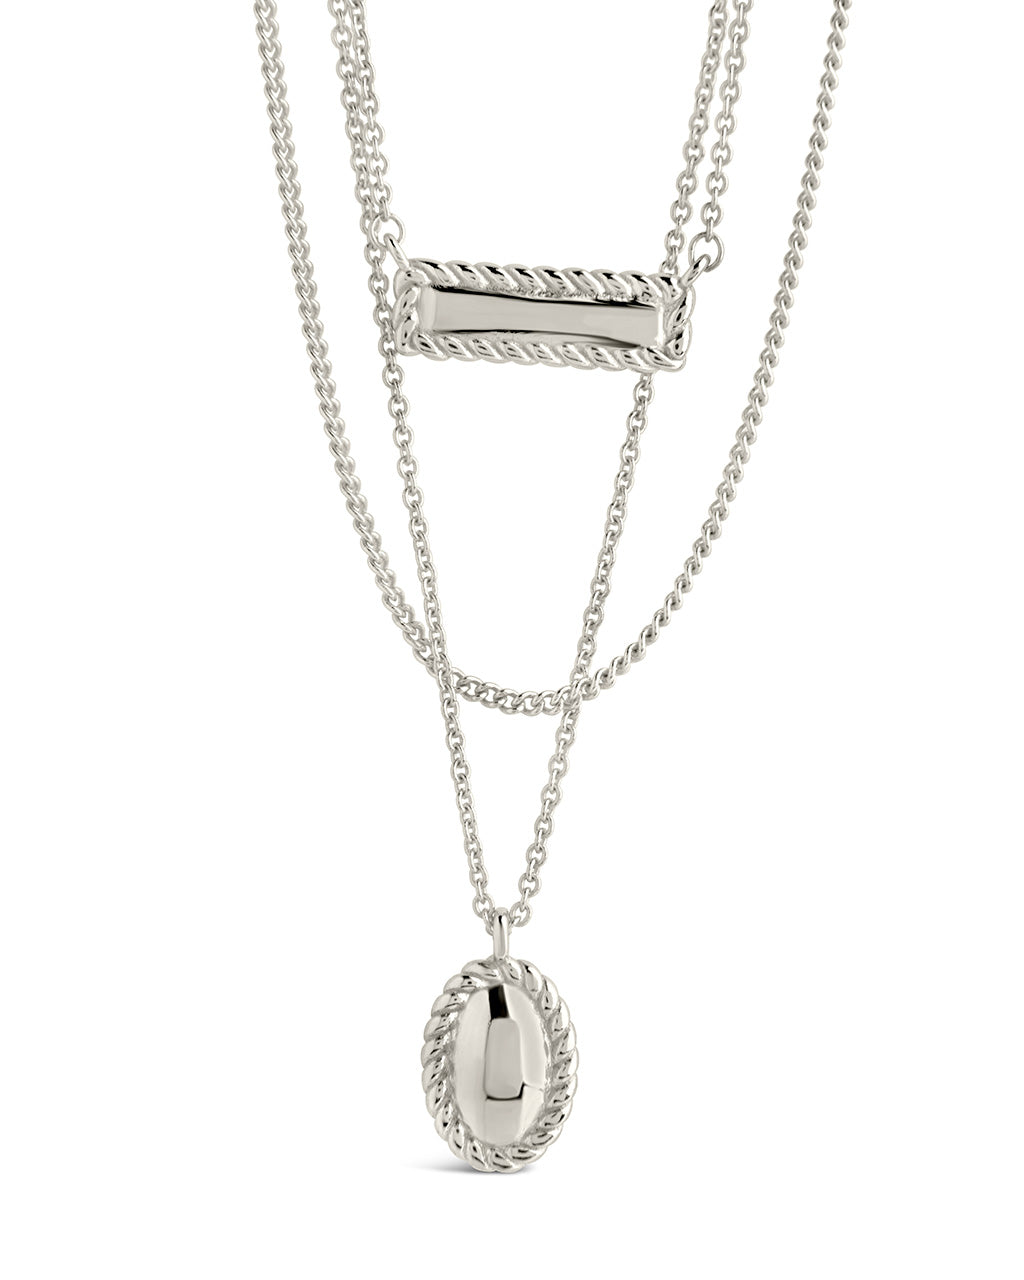 Bolti Layering Necklace - Sterling Silver - Andrea Shelley Designs